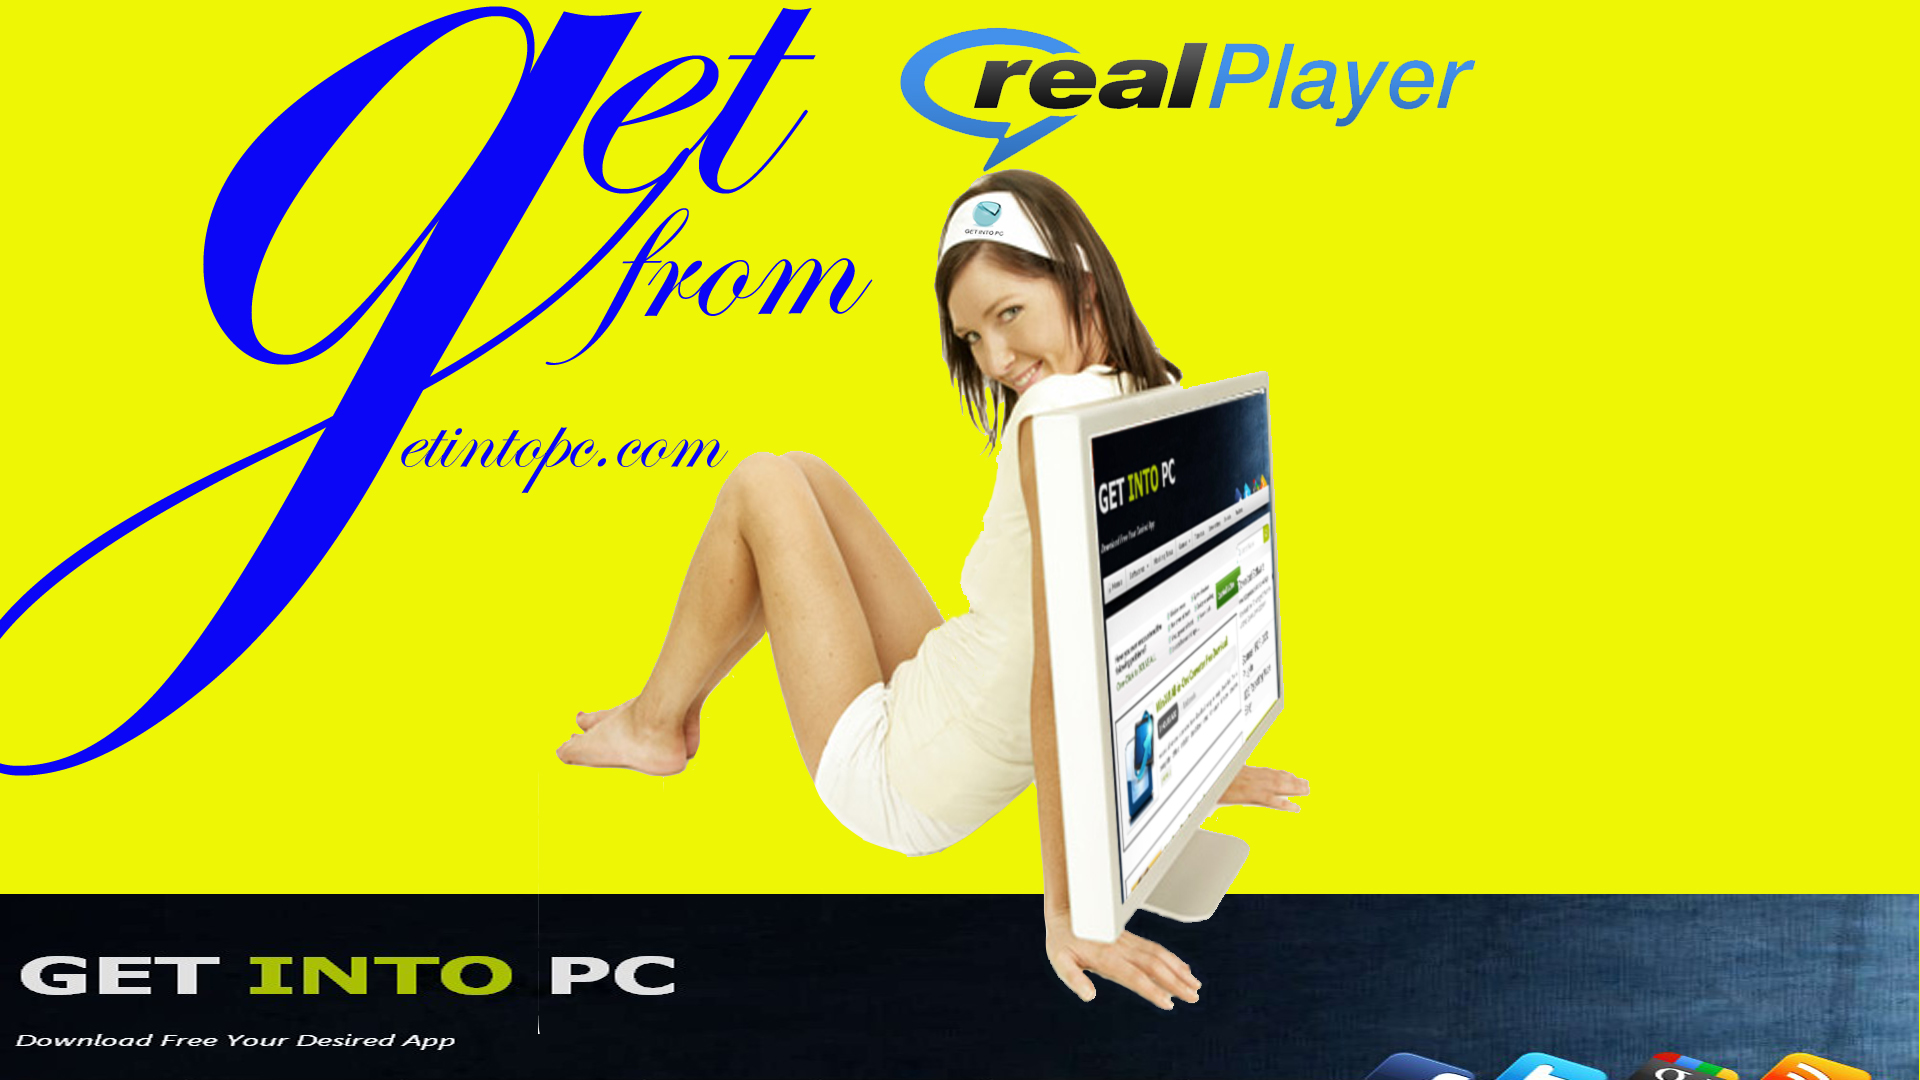 RealPlayer from getintopc.com